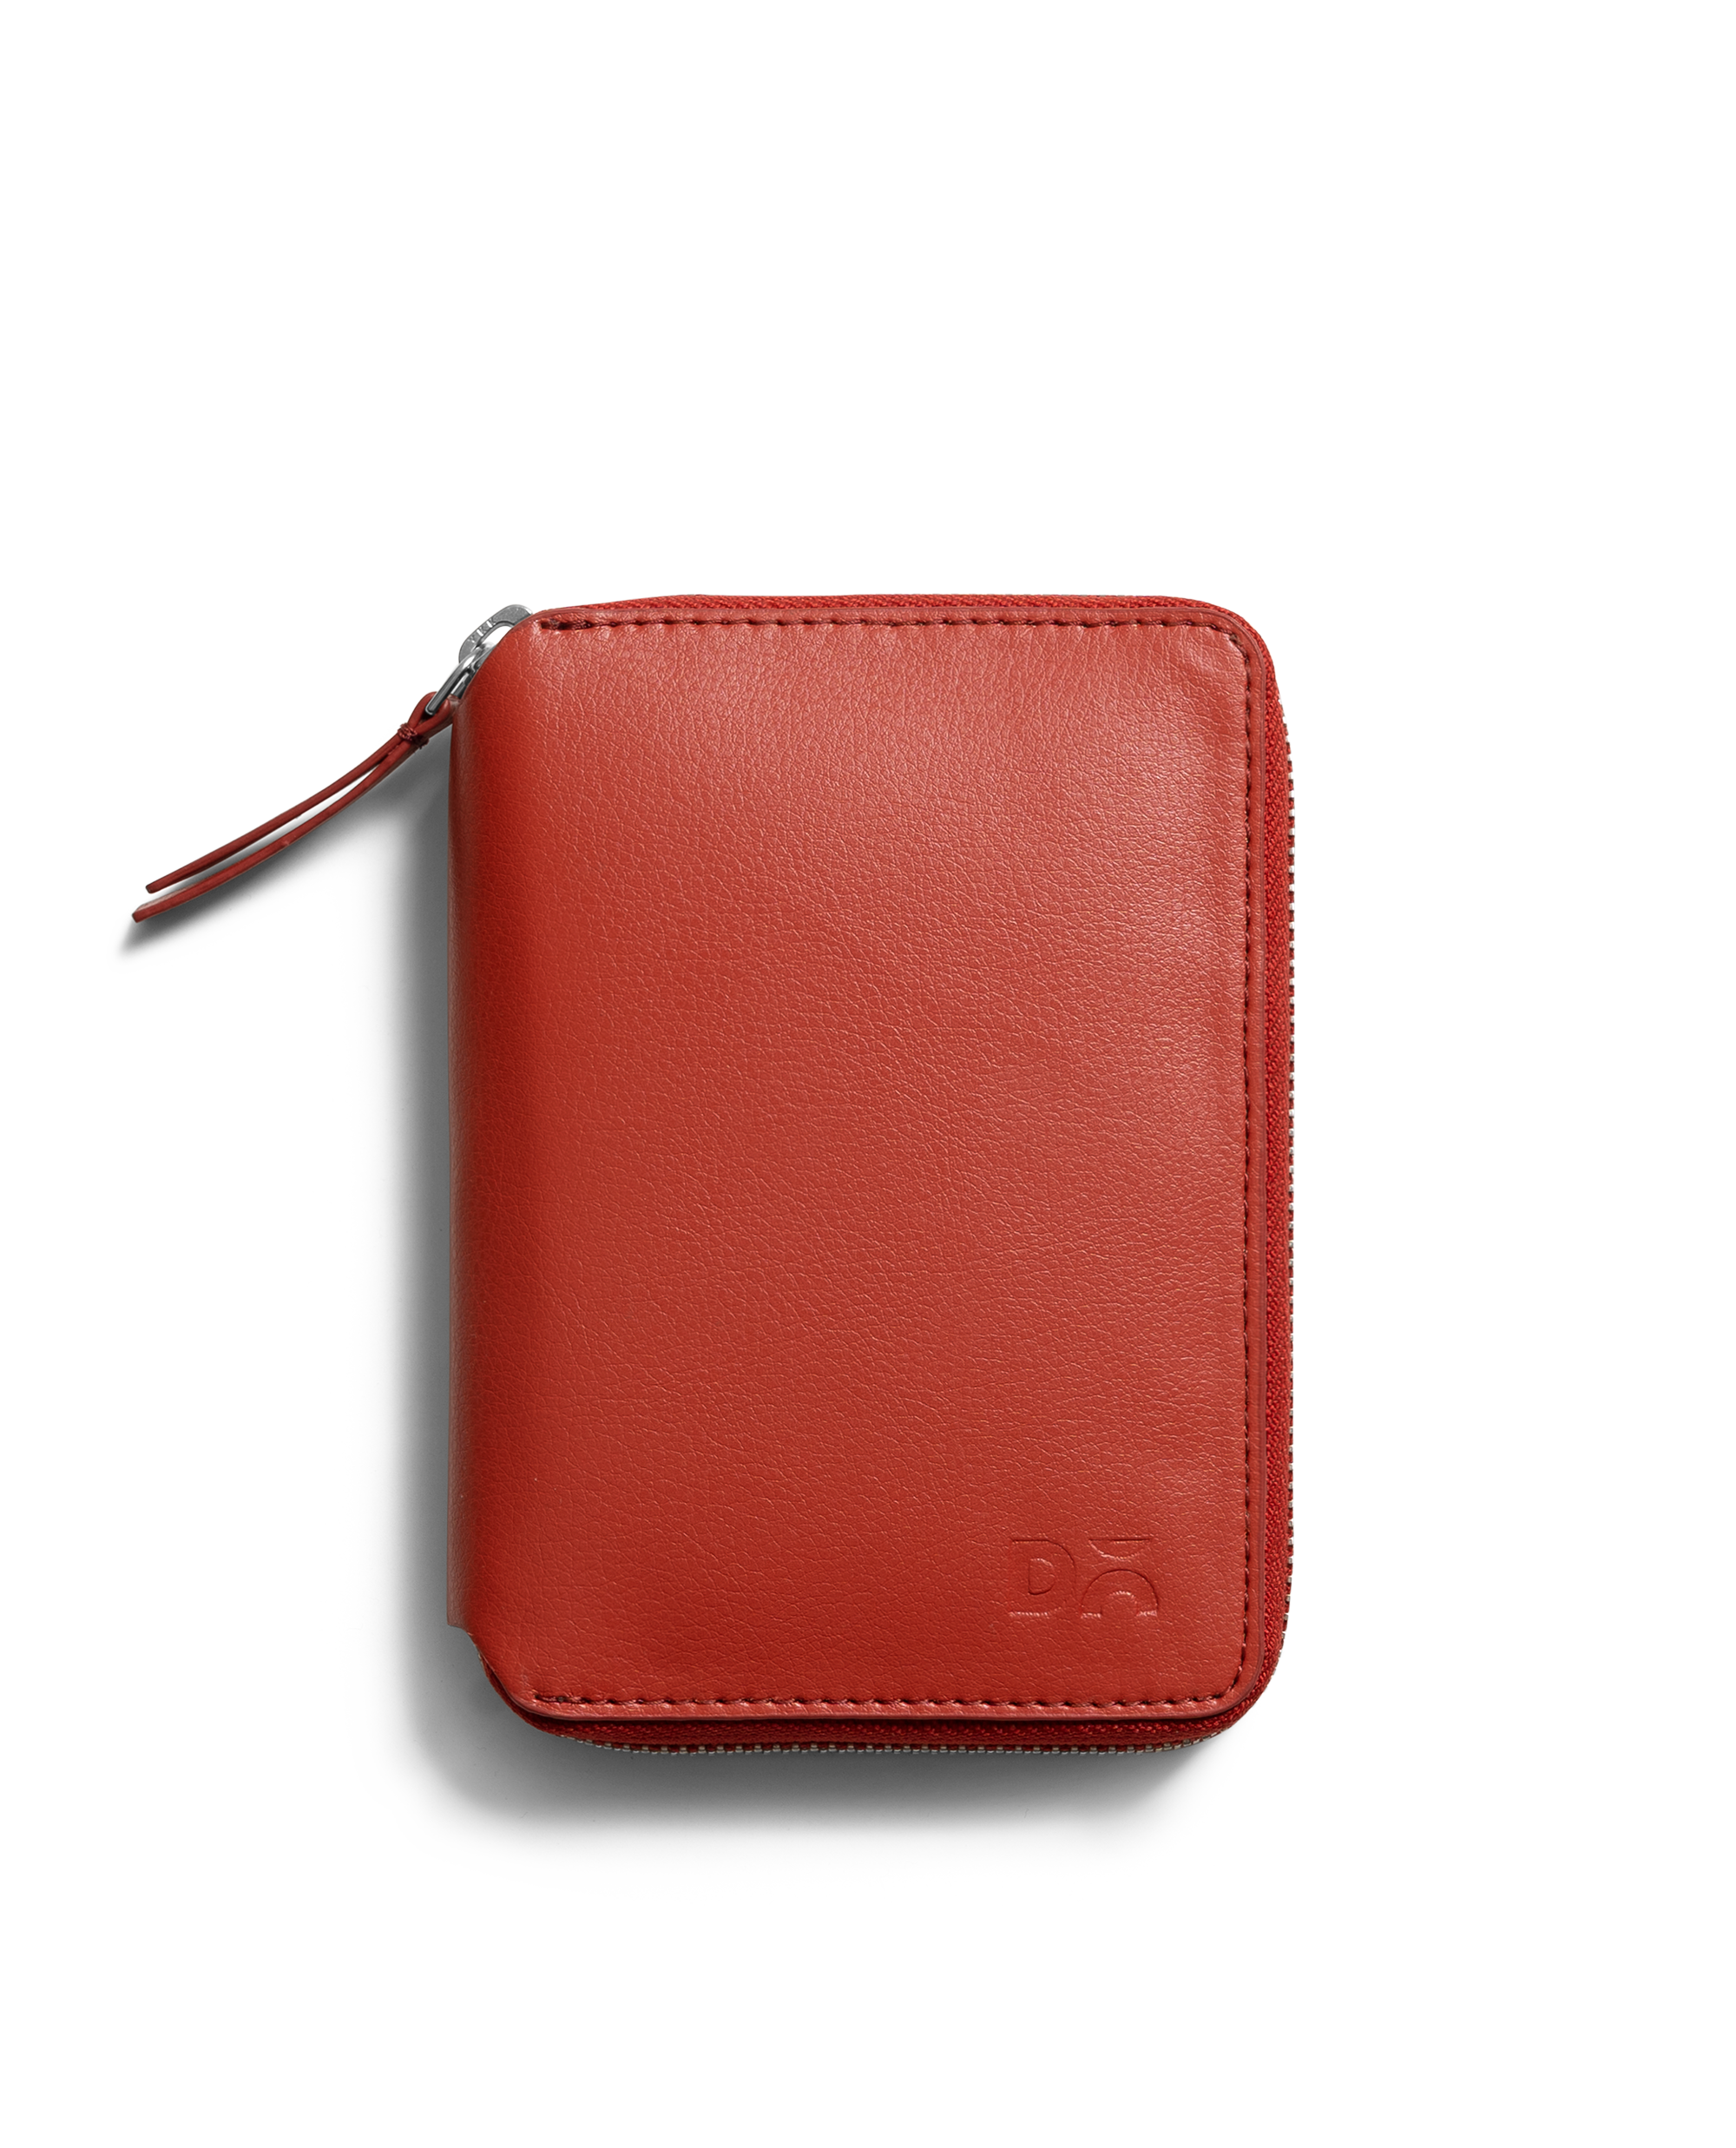 Buy Leather Passport Wallet Rfid, Travel Passport Wallet, Leather Passport  Cover Personalized, Leather Passport Holder Wallet Online in India - Etsy